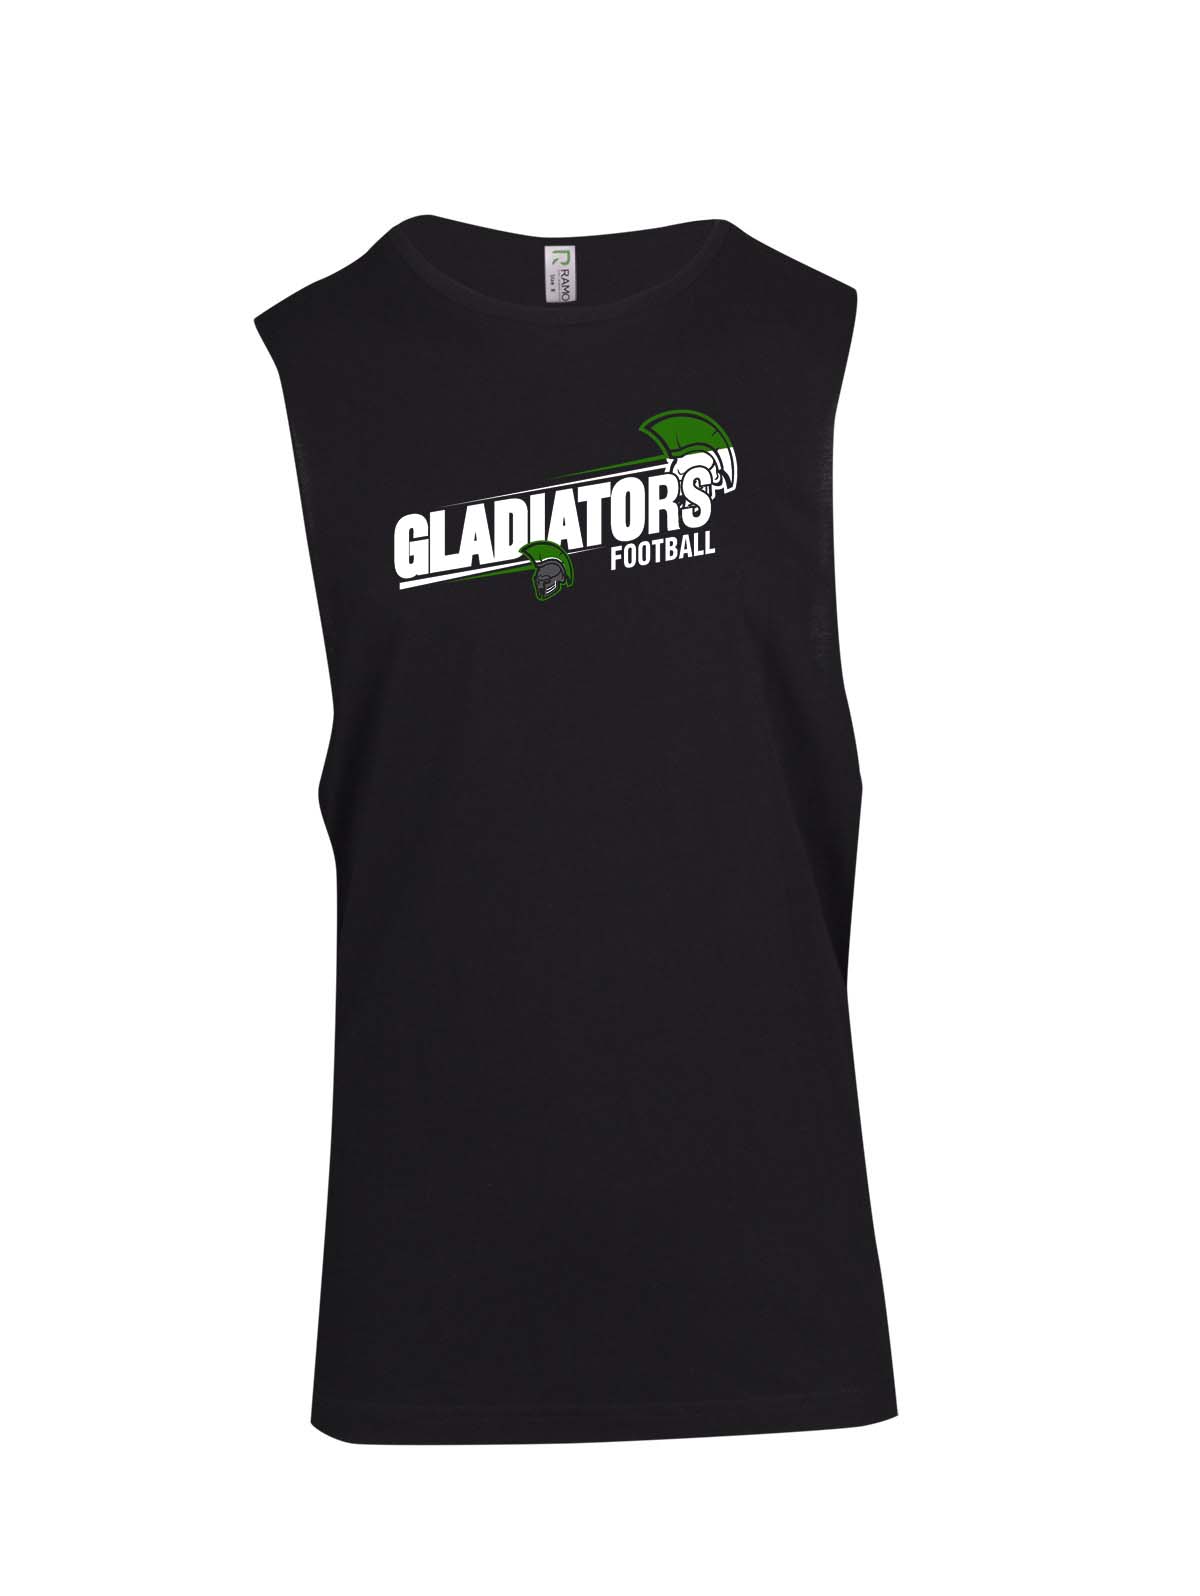 Gladiators Slanted logo Muscle T - Ladies